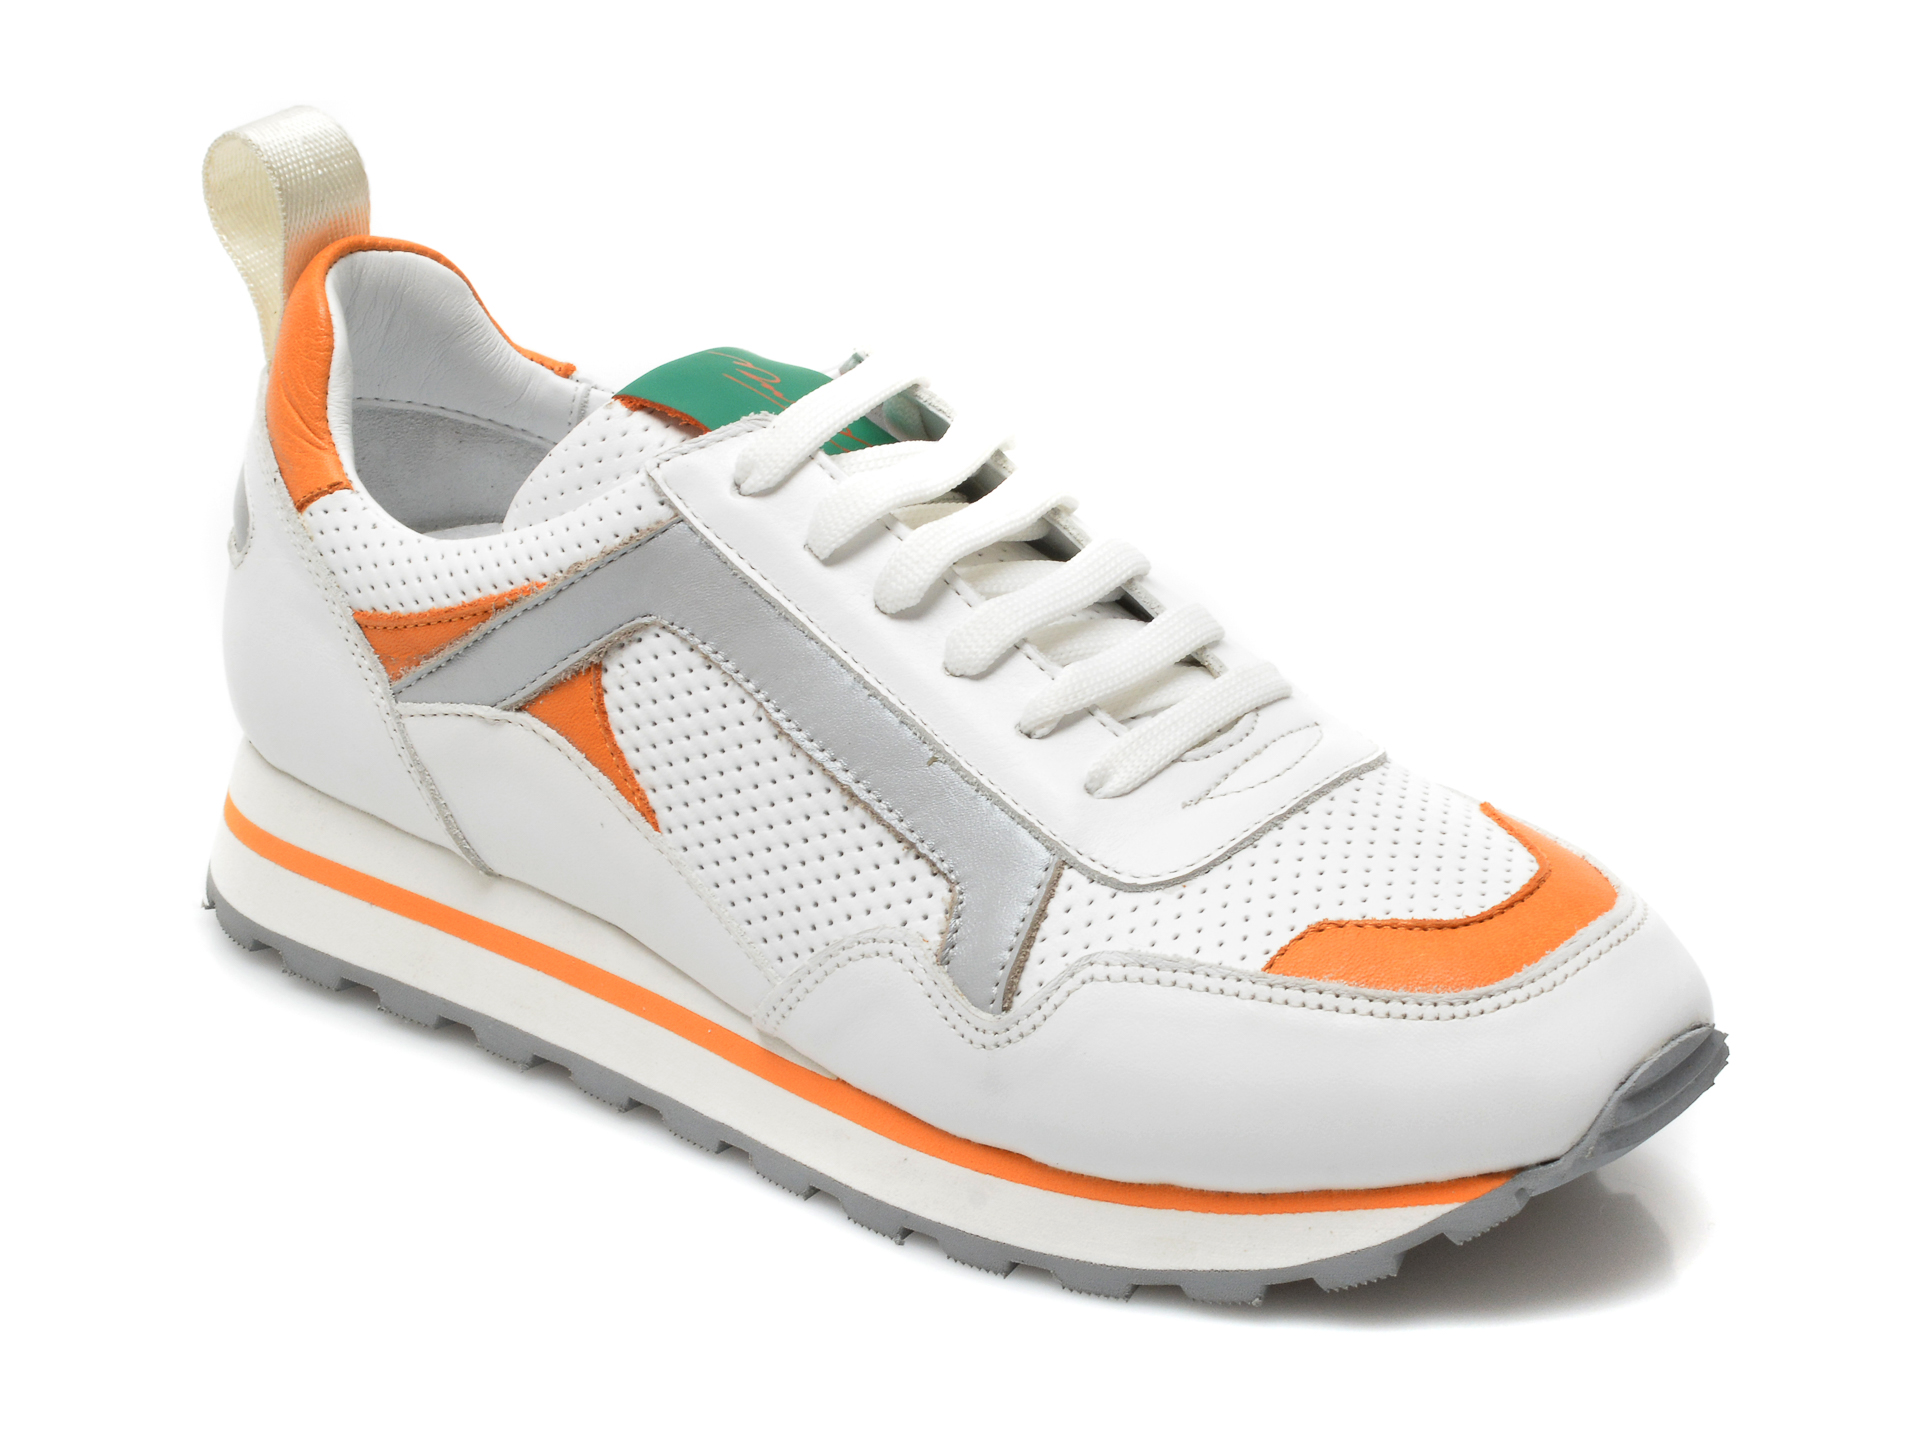 Pantofi sport MARIO MUZI albi, 261, din piele naturala